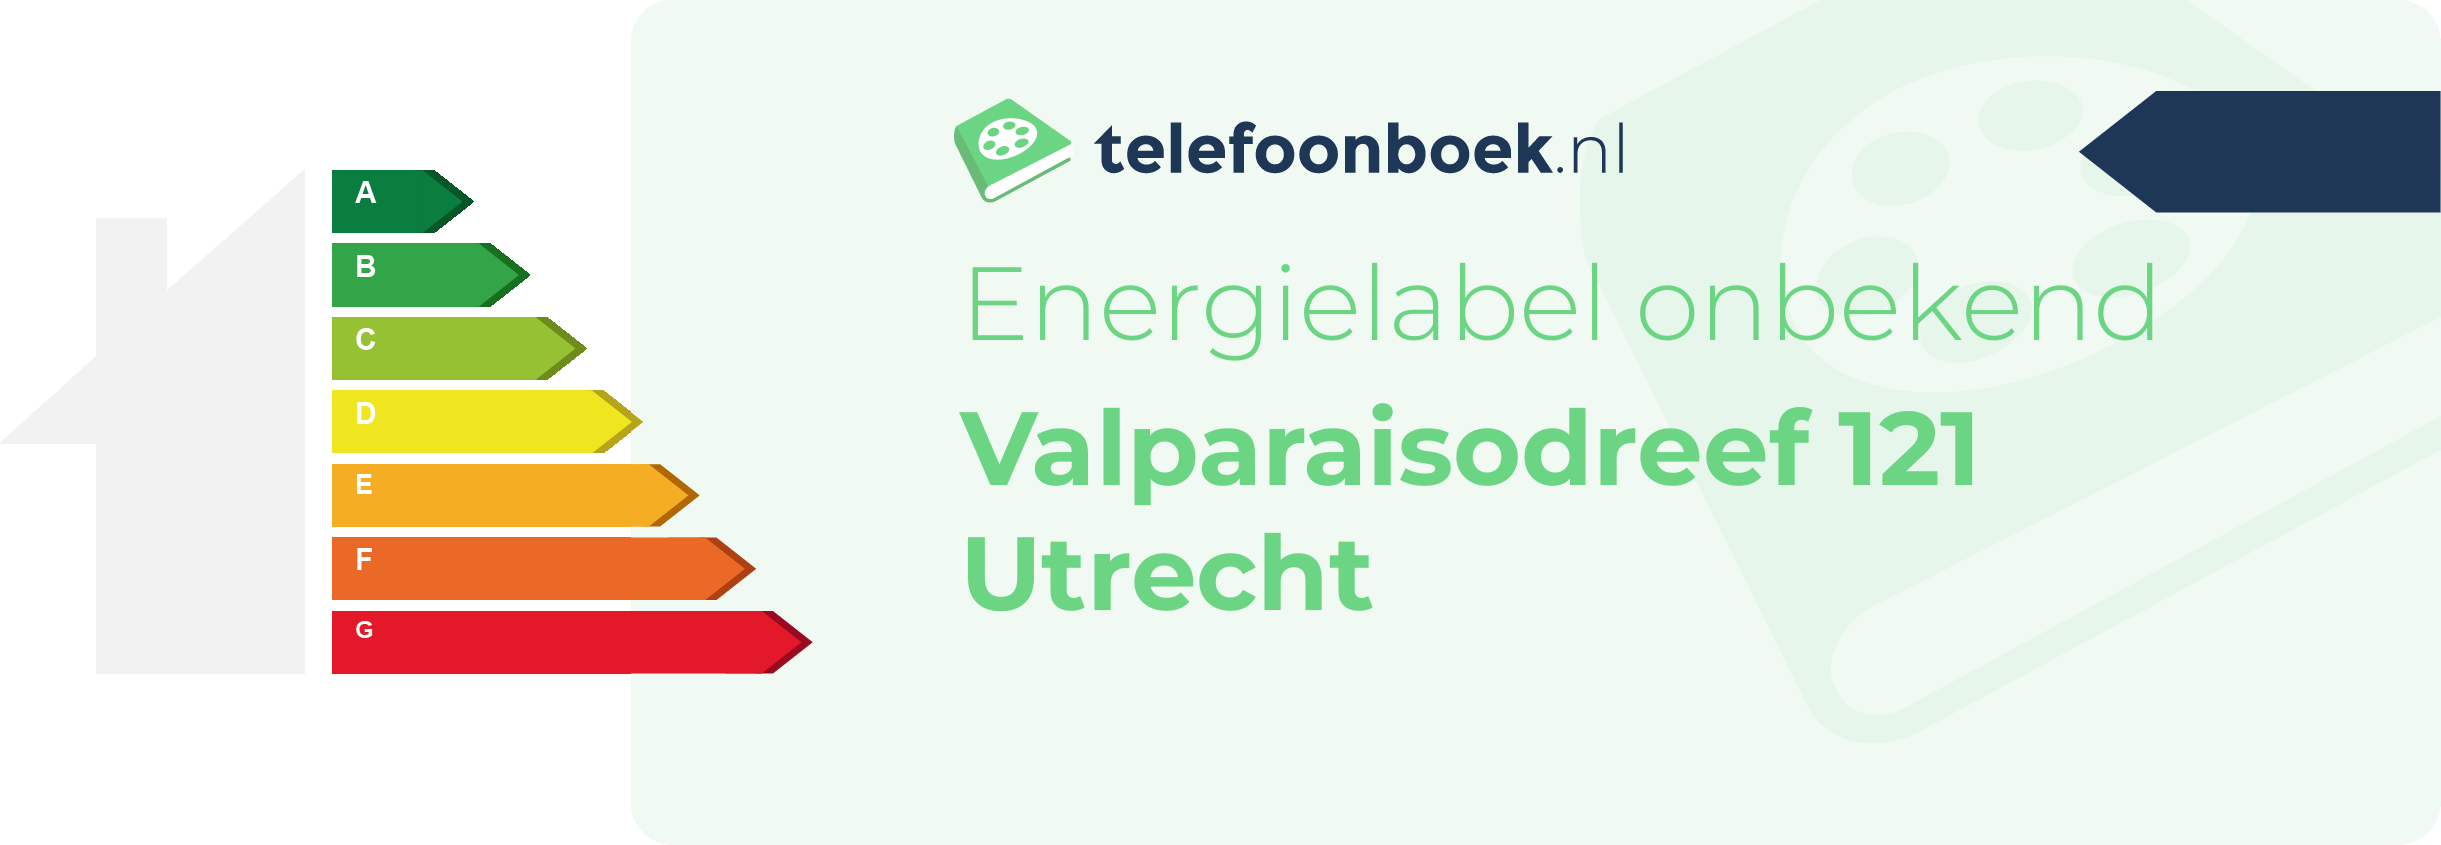 Energielabel Valparaisodreef 121 Utrecht